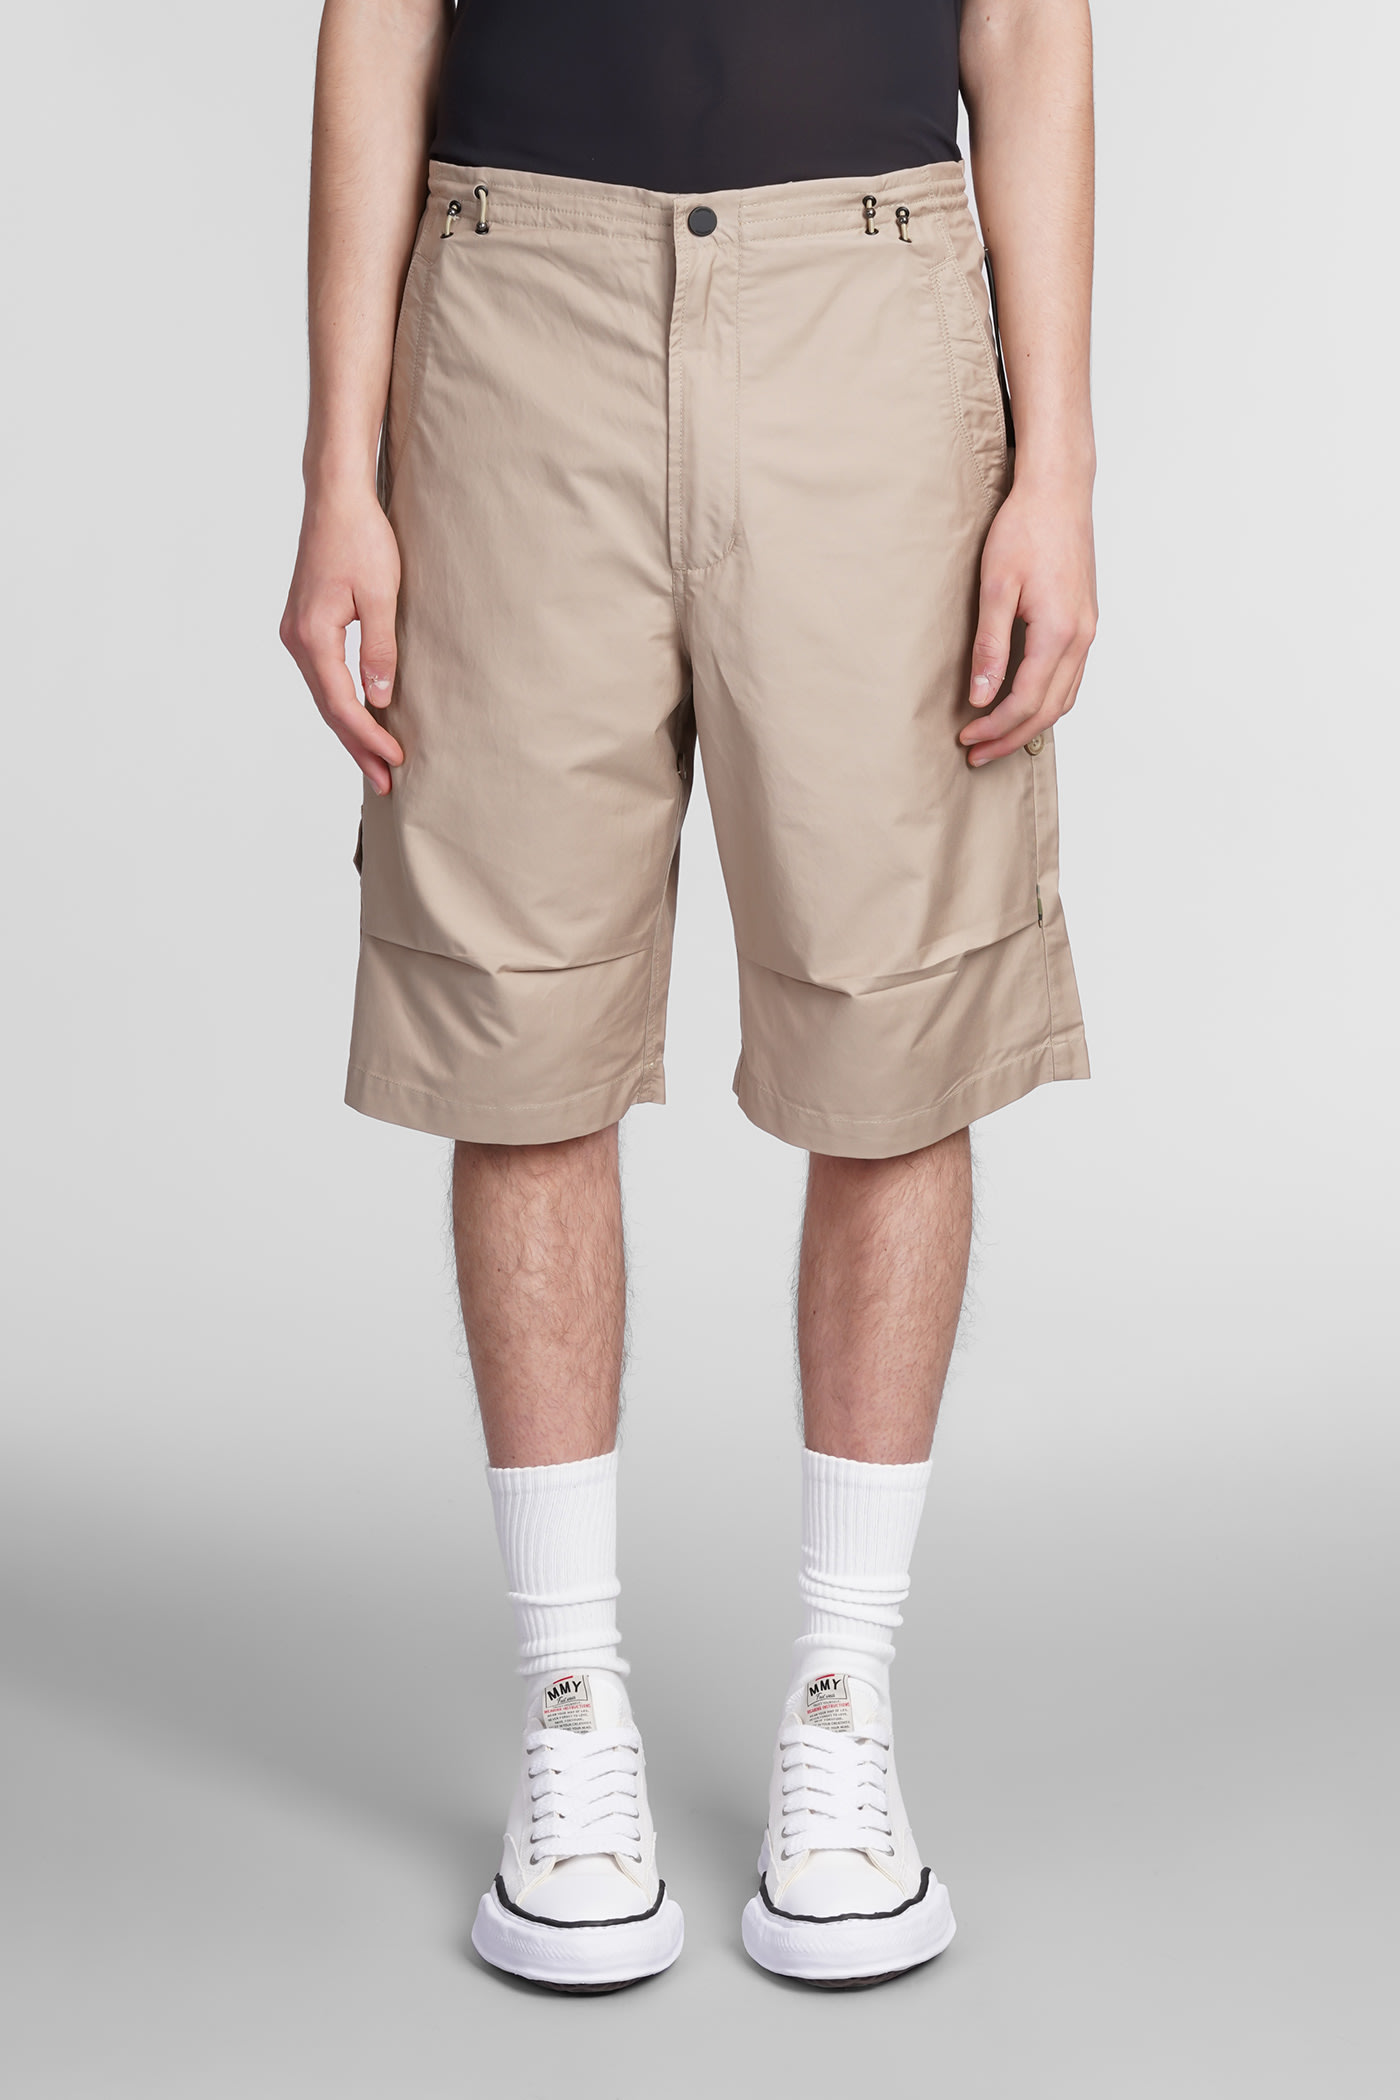 Maharishi Shorts In Beige Cotton